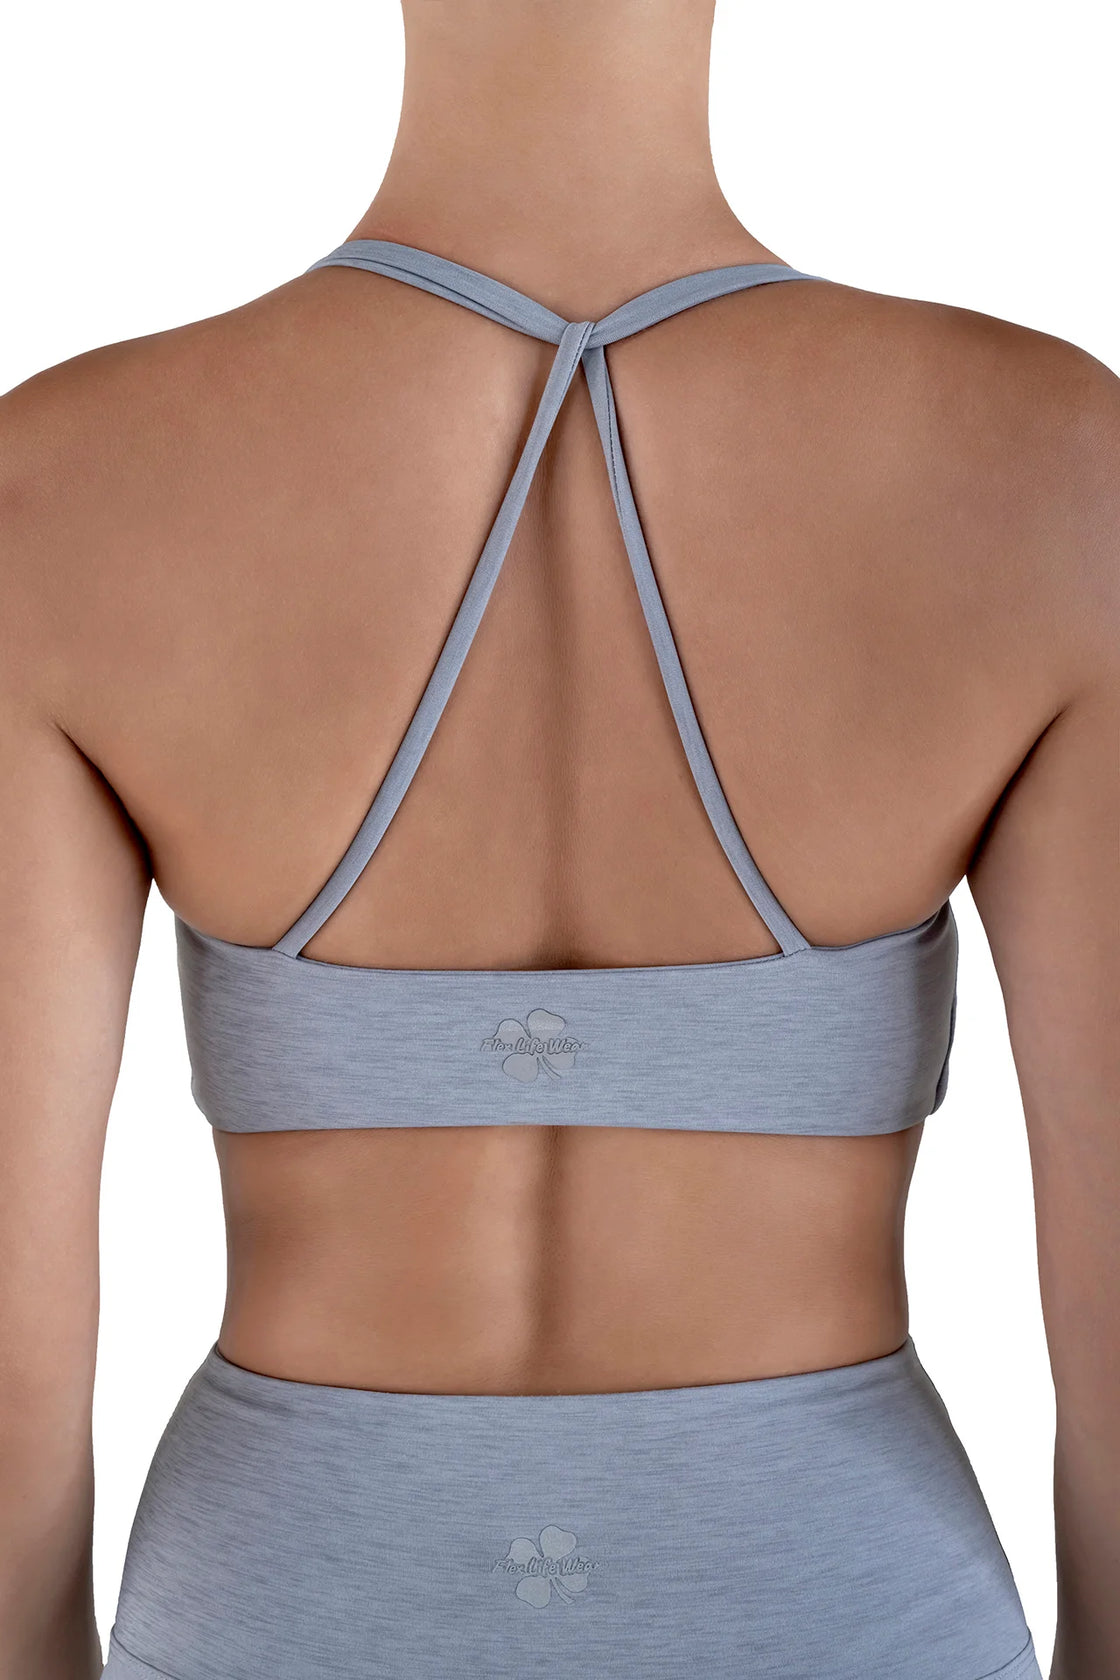 Light grey Open back bra 